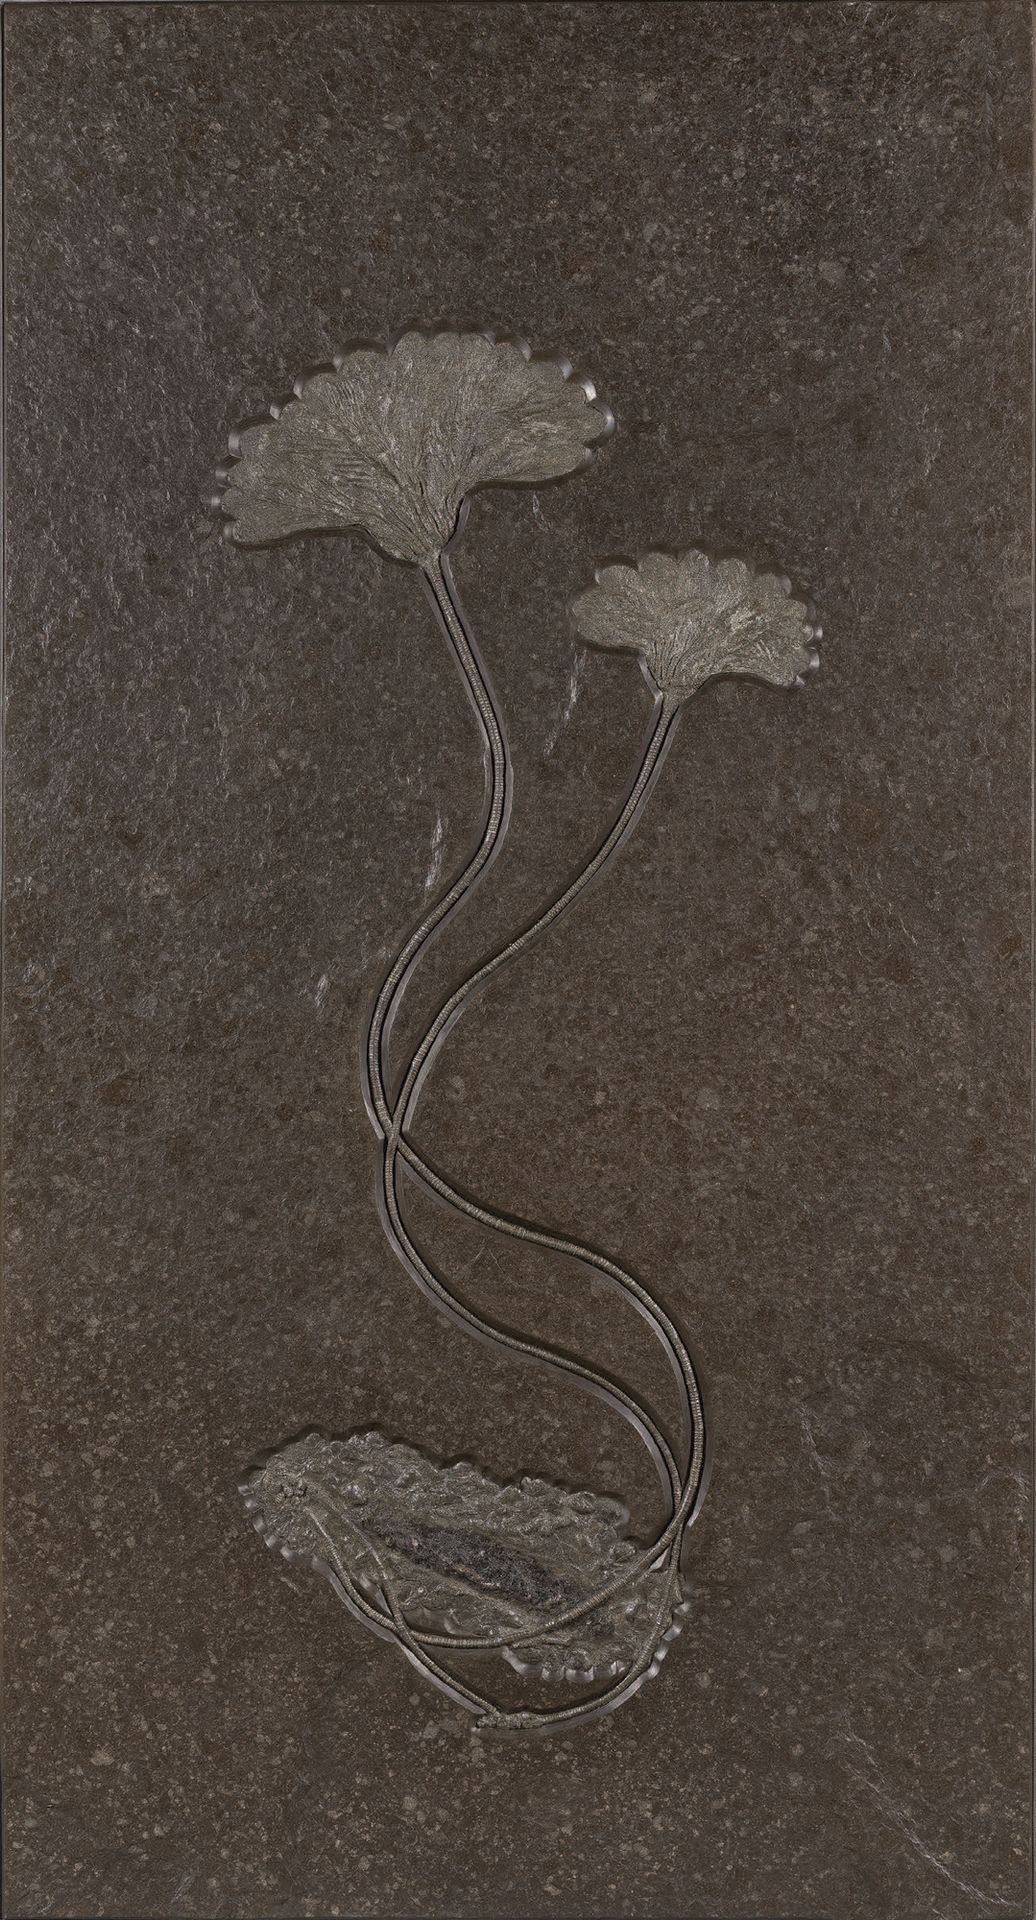 Null Fossil sea lily assemblage
Seirocrinus subangularis
Toarcian, Lower Jurassi&hellip;